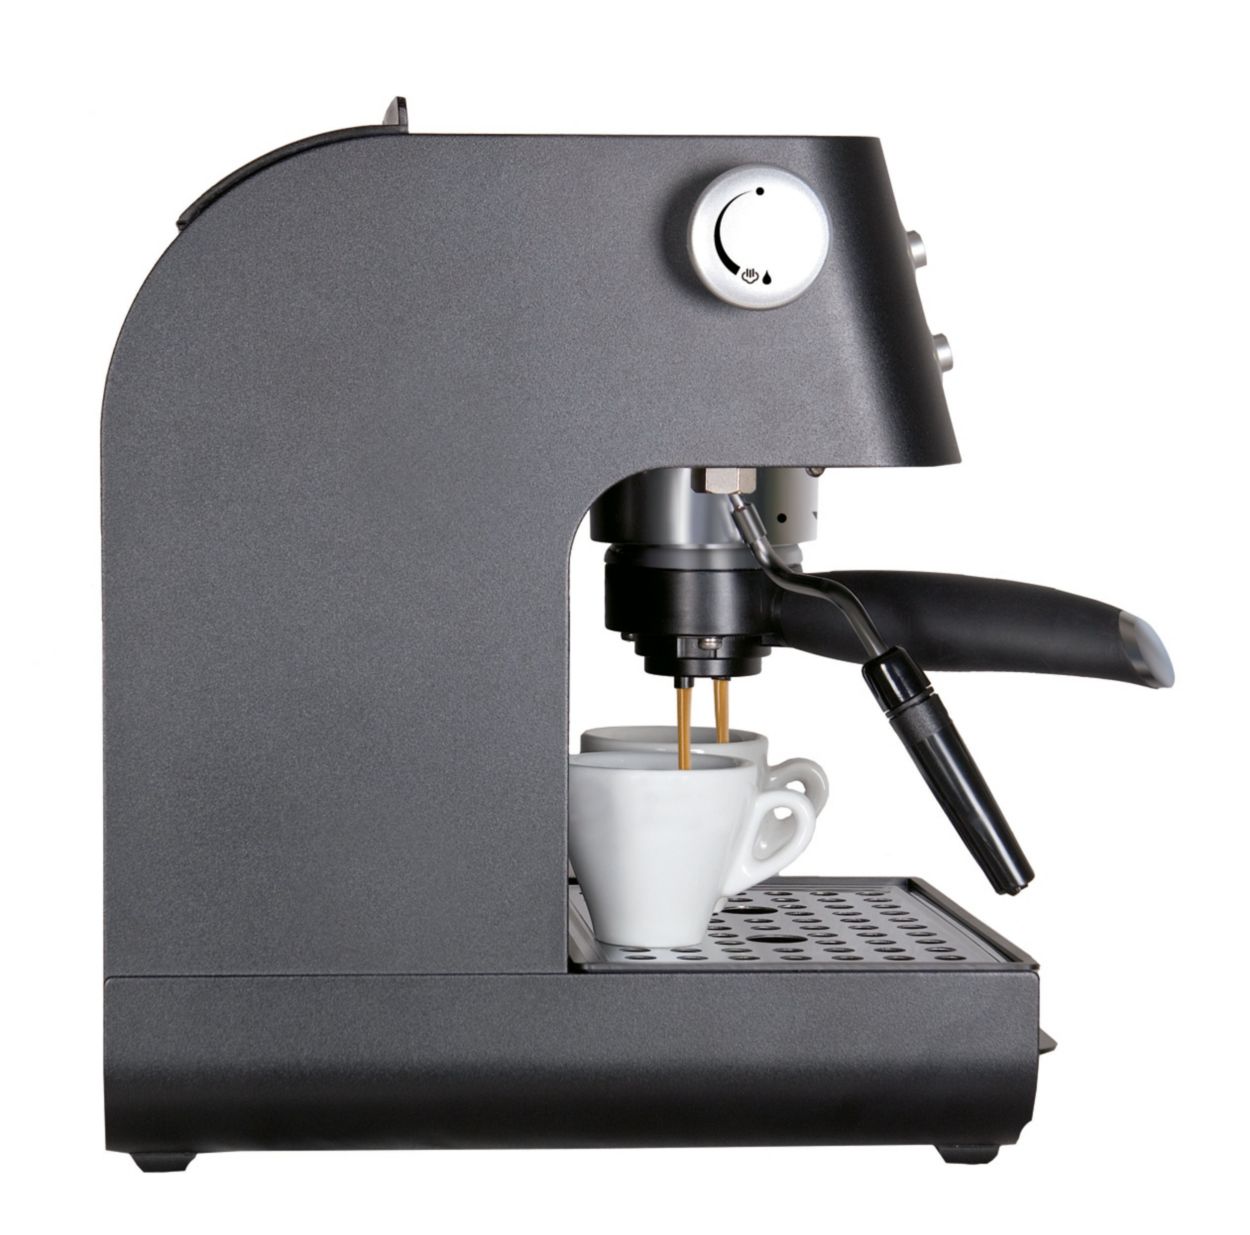 Via Venezia Manual Espresso machine RI9366/47